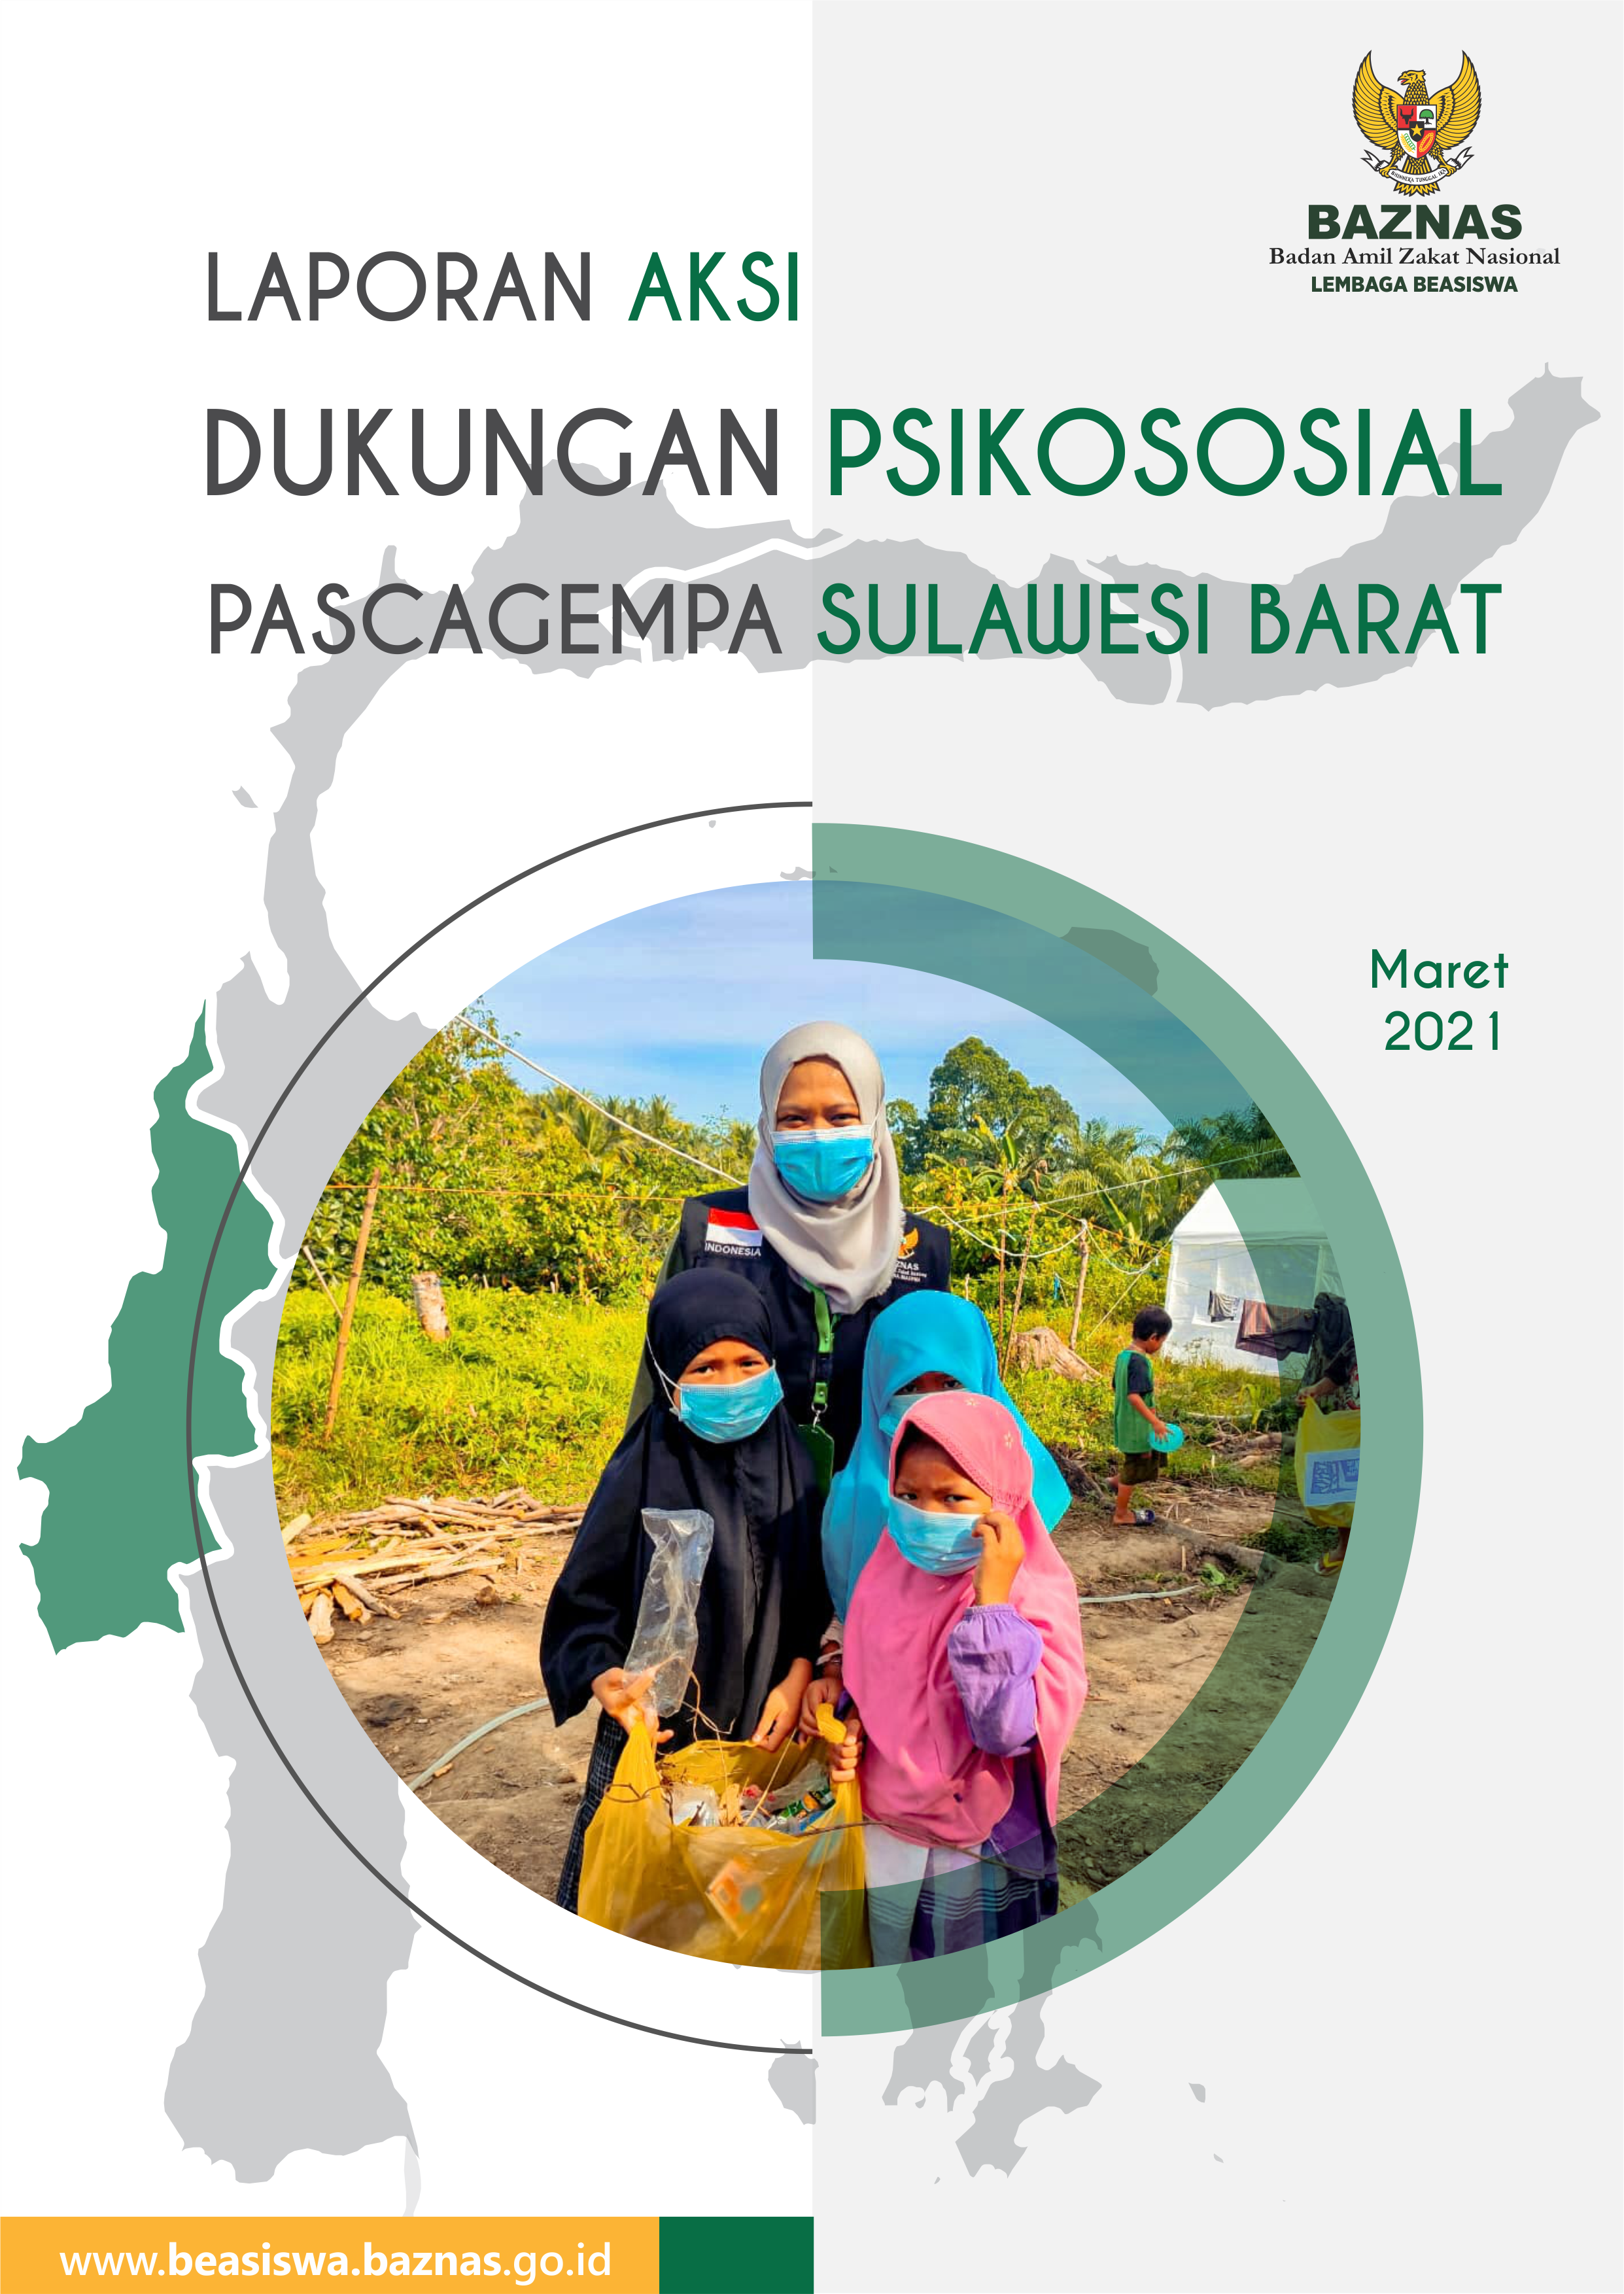 Laporan Dukungan Psikososial Pasca Bencana Sulawesi Barat